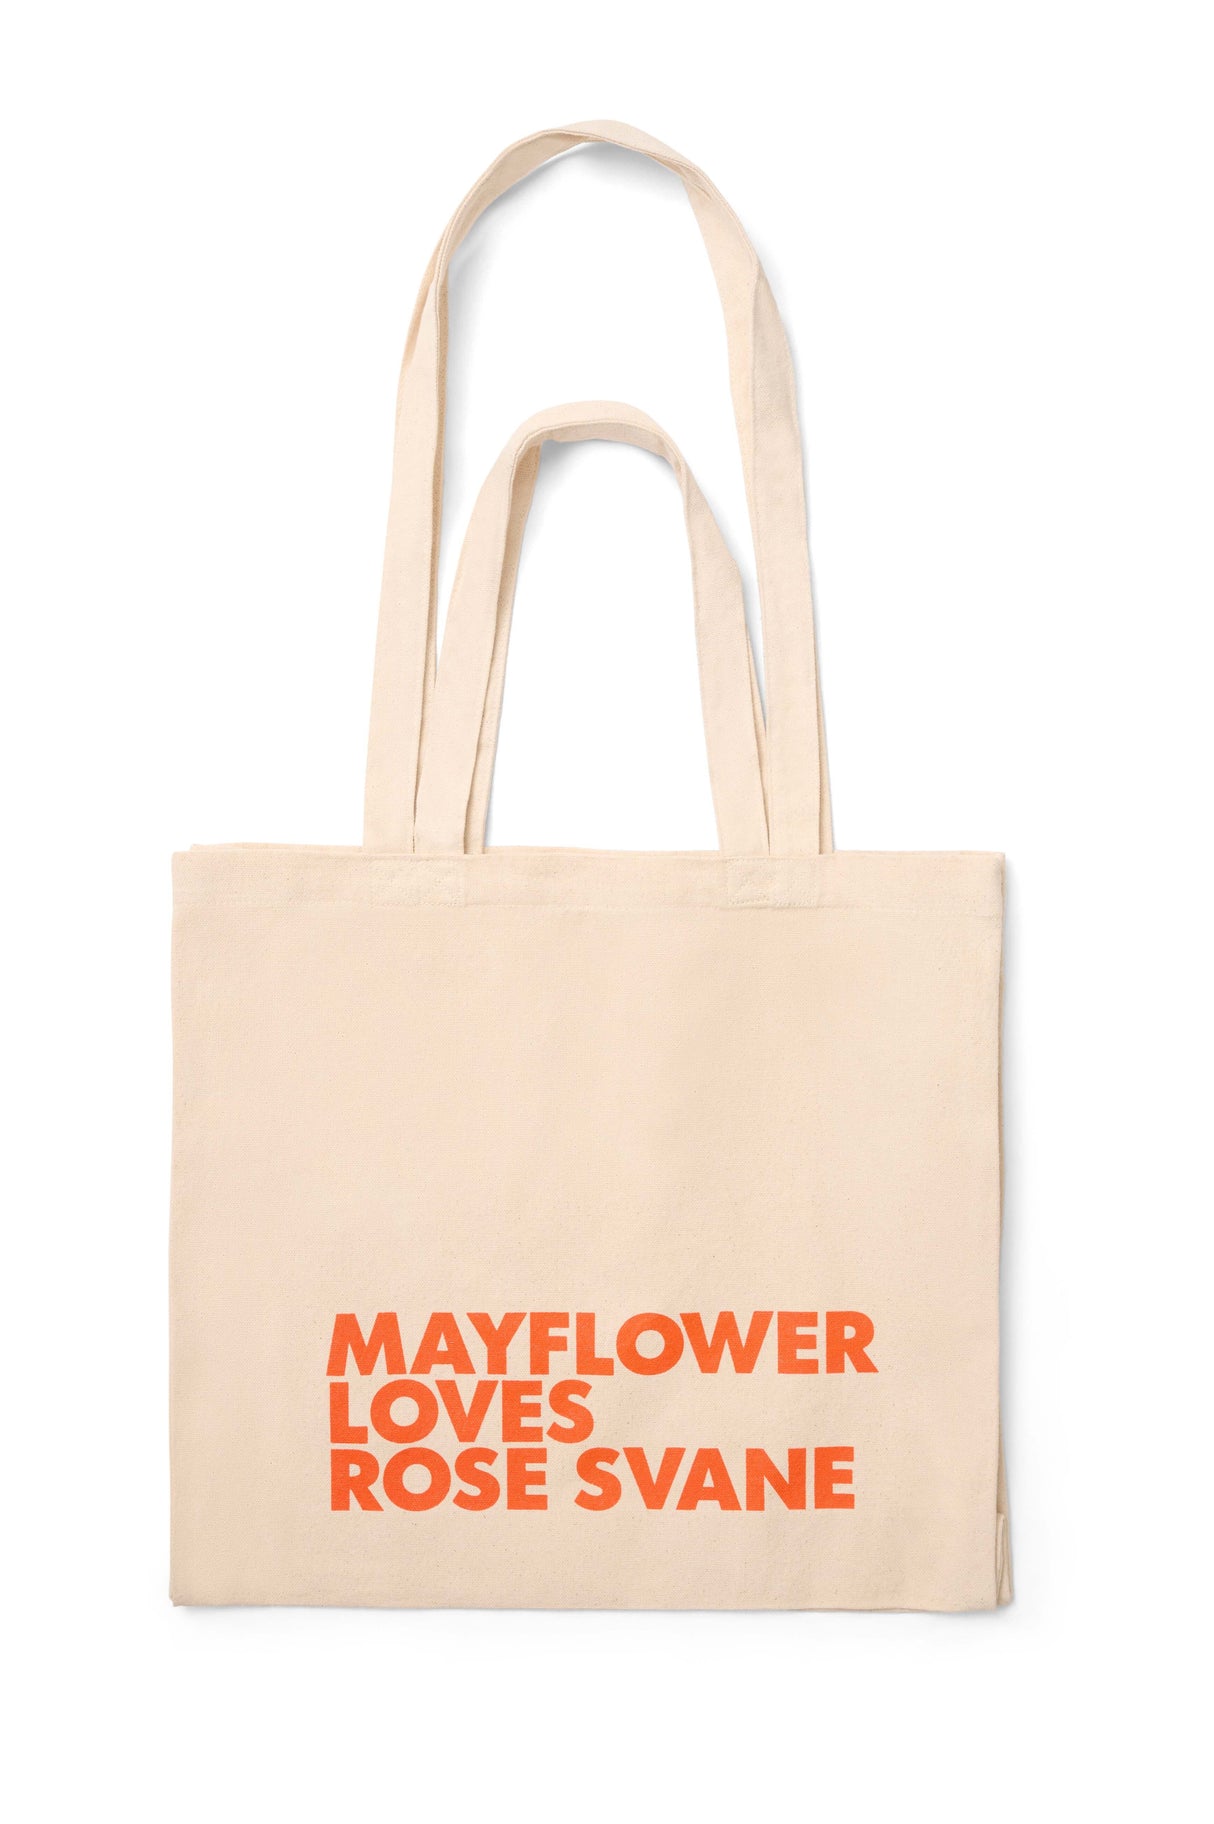 Mayflower x Rose Svane Tote Bag - Limited Edition